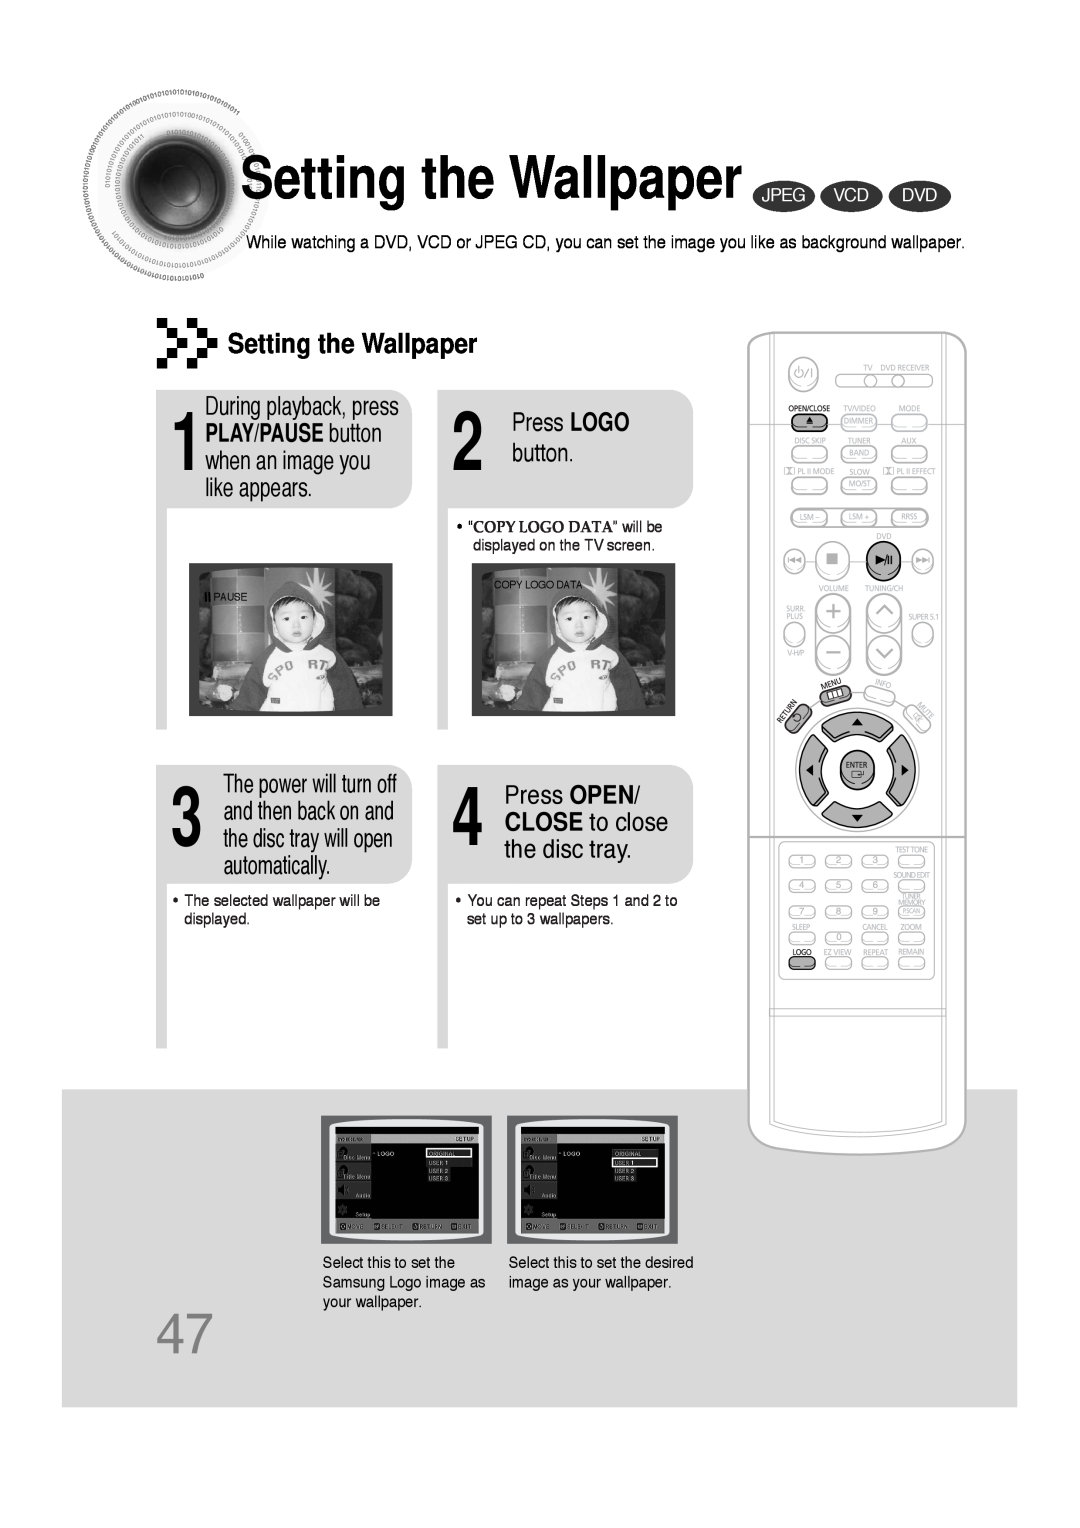 Samsung 20051111103302296 Settingthe Wallpaper JPEG VCD DVD, Setting the Wallpaper, During playback, press, button 